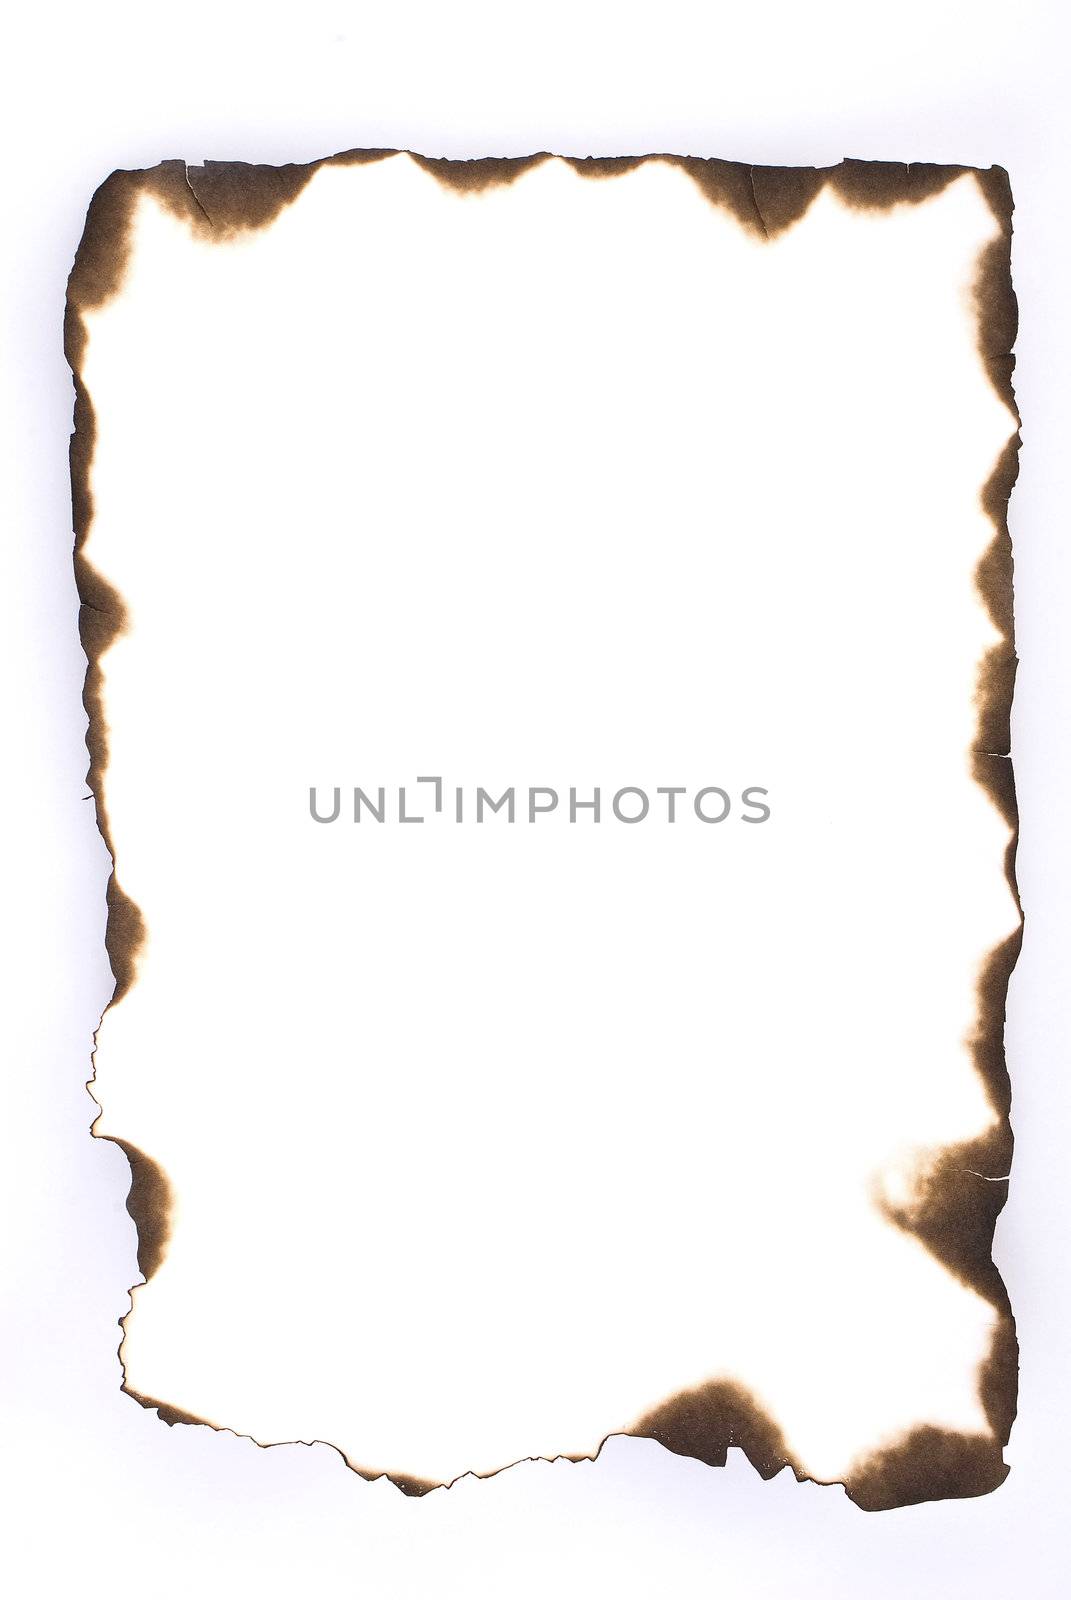 Burned paper by caldix